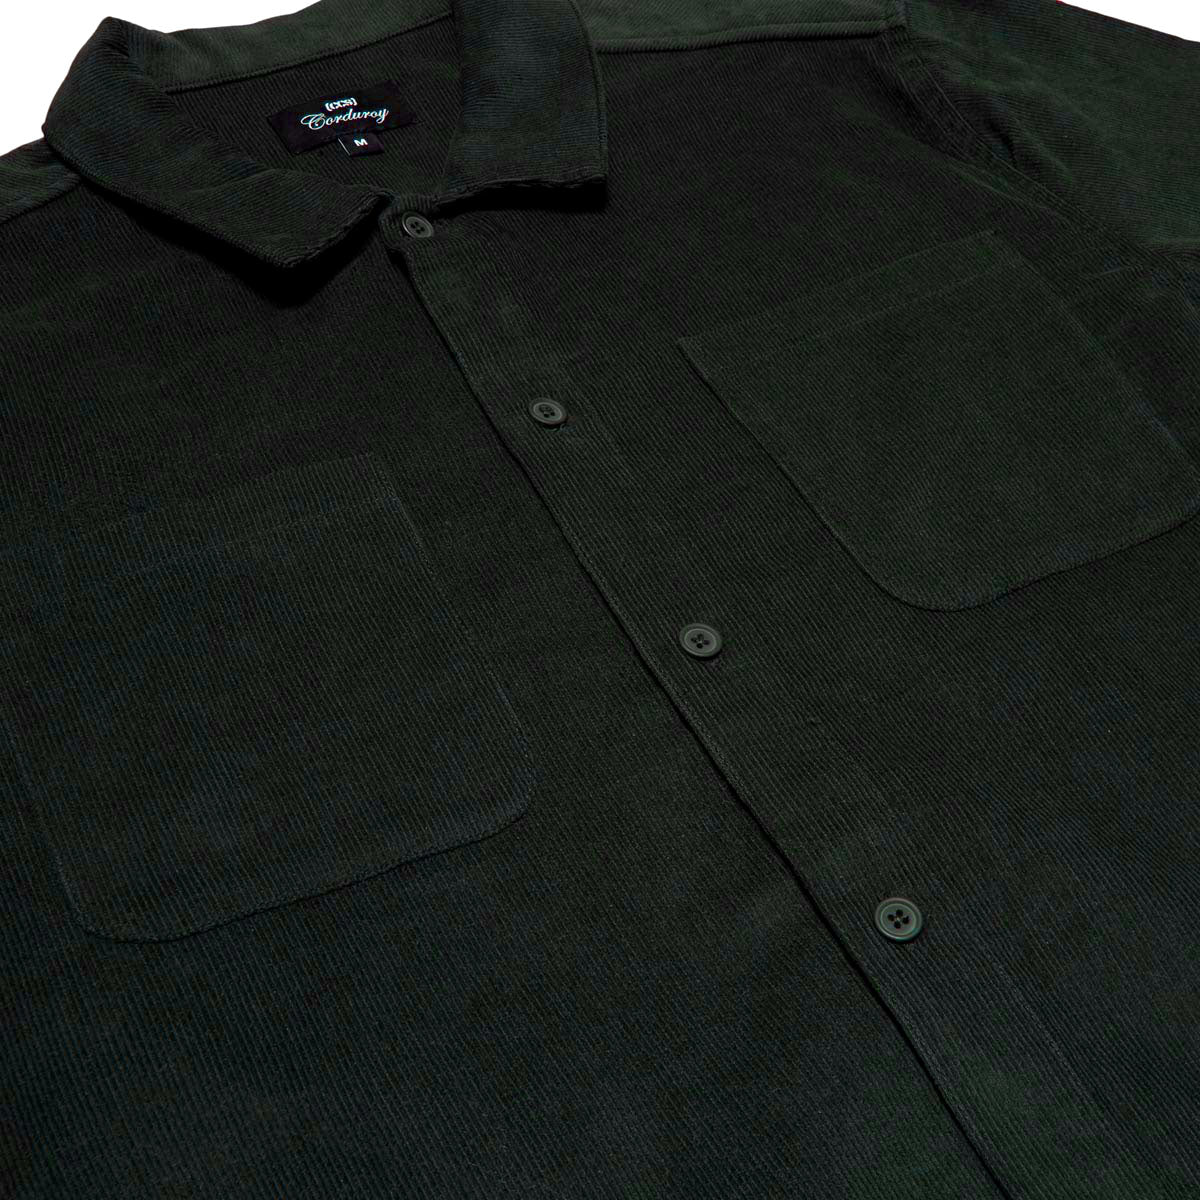 CCS Long Sleeve Corduroy Shirt - Green image 4